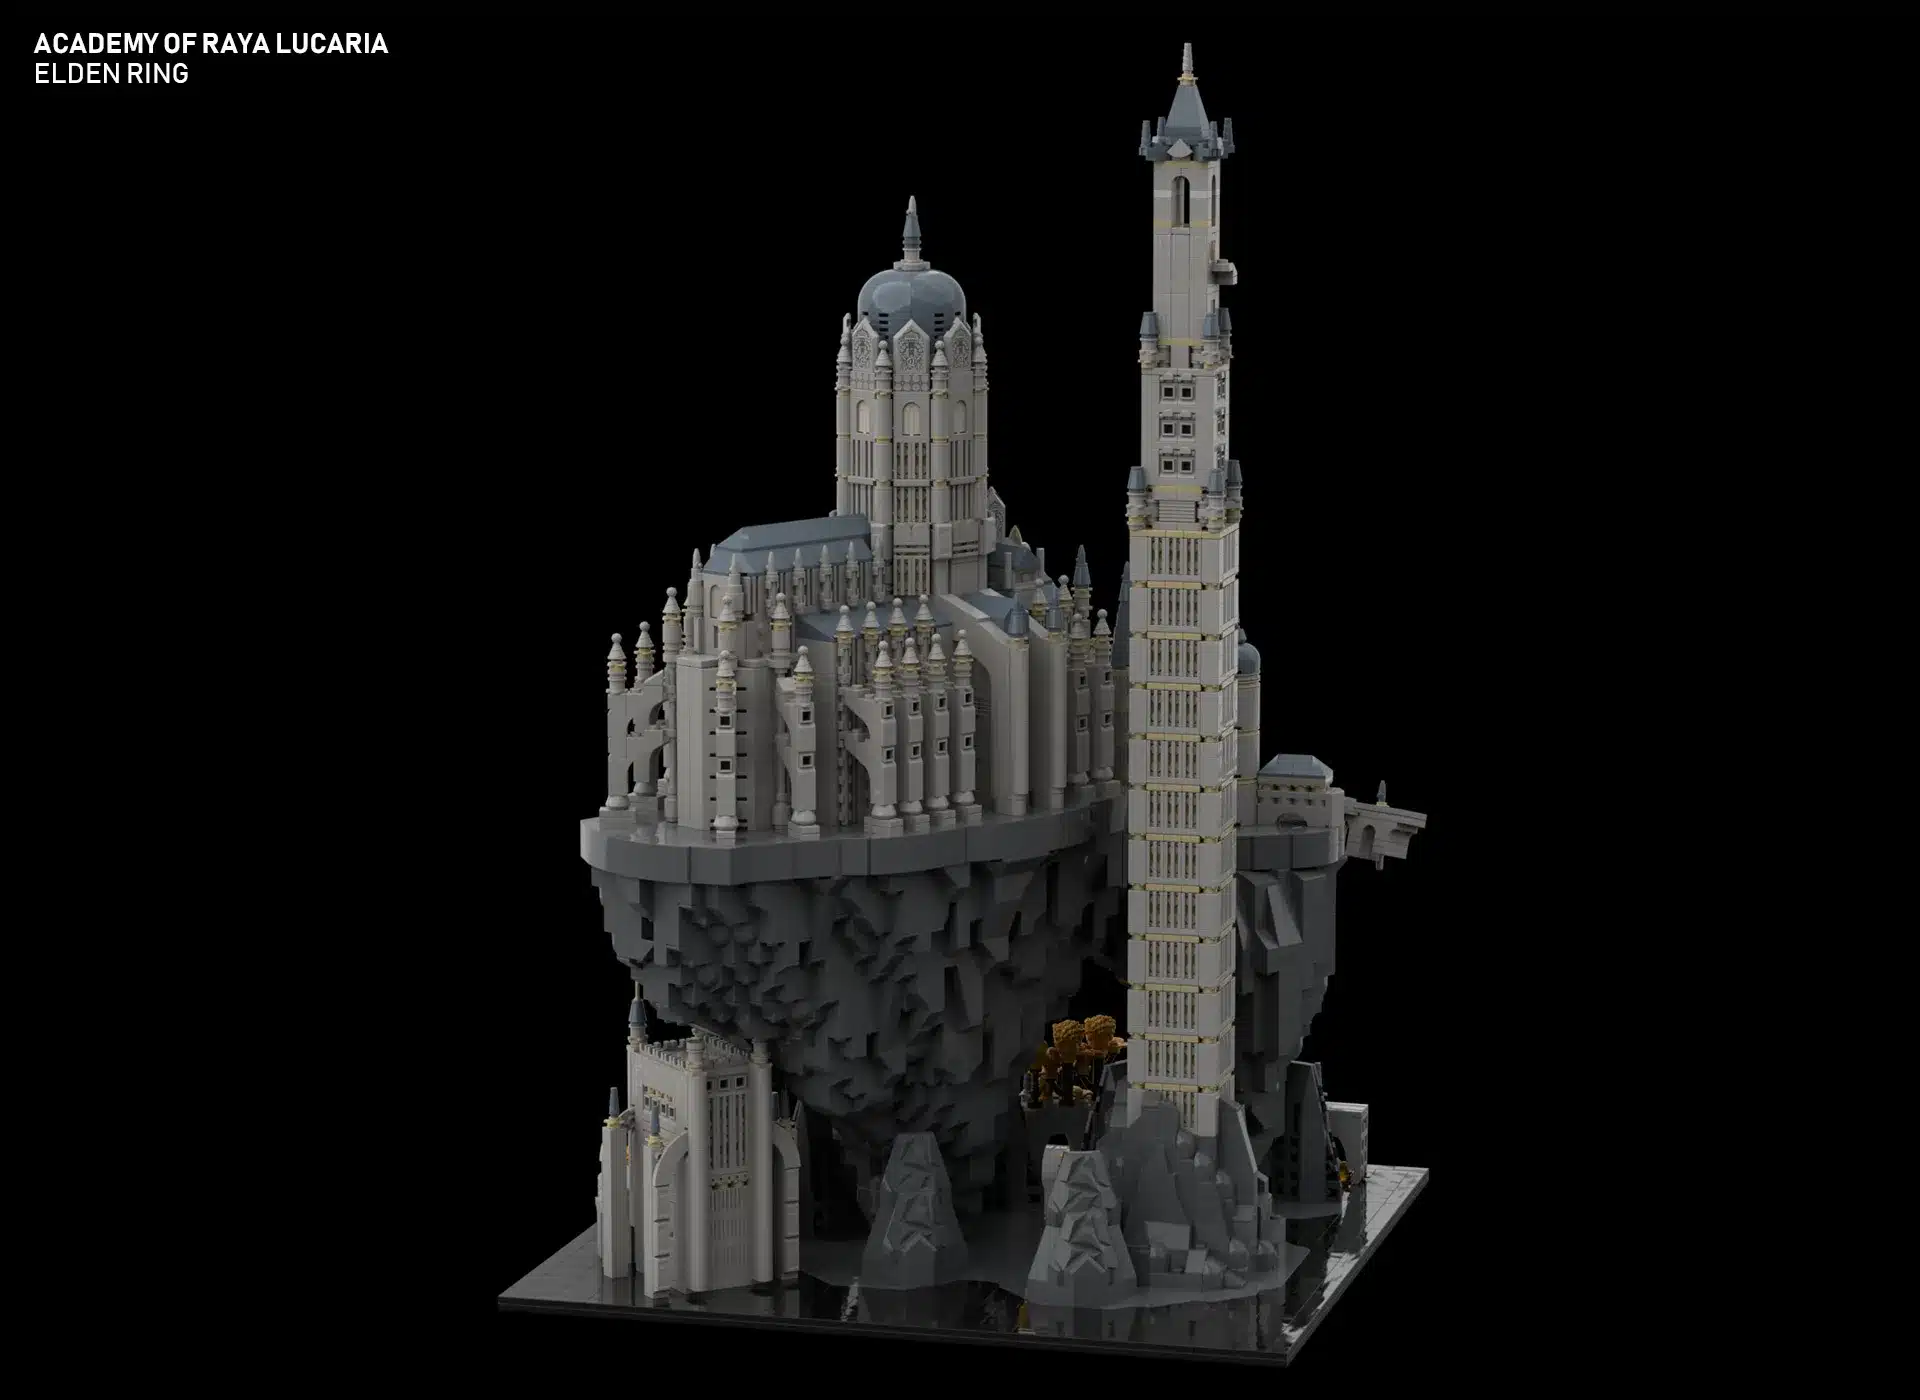 LEGO Royal Academy of Raya Lucaria